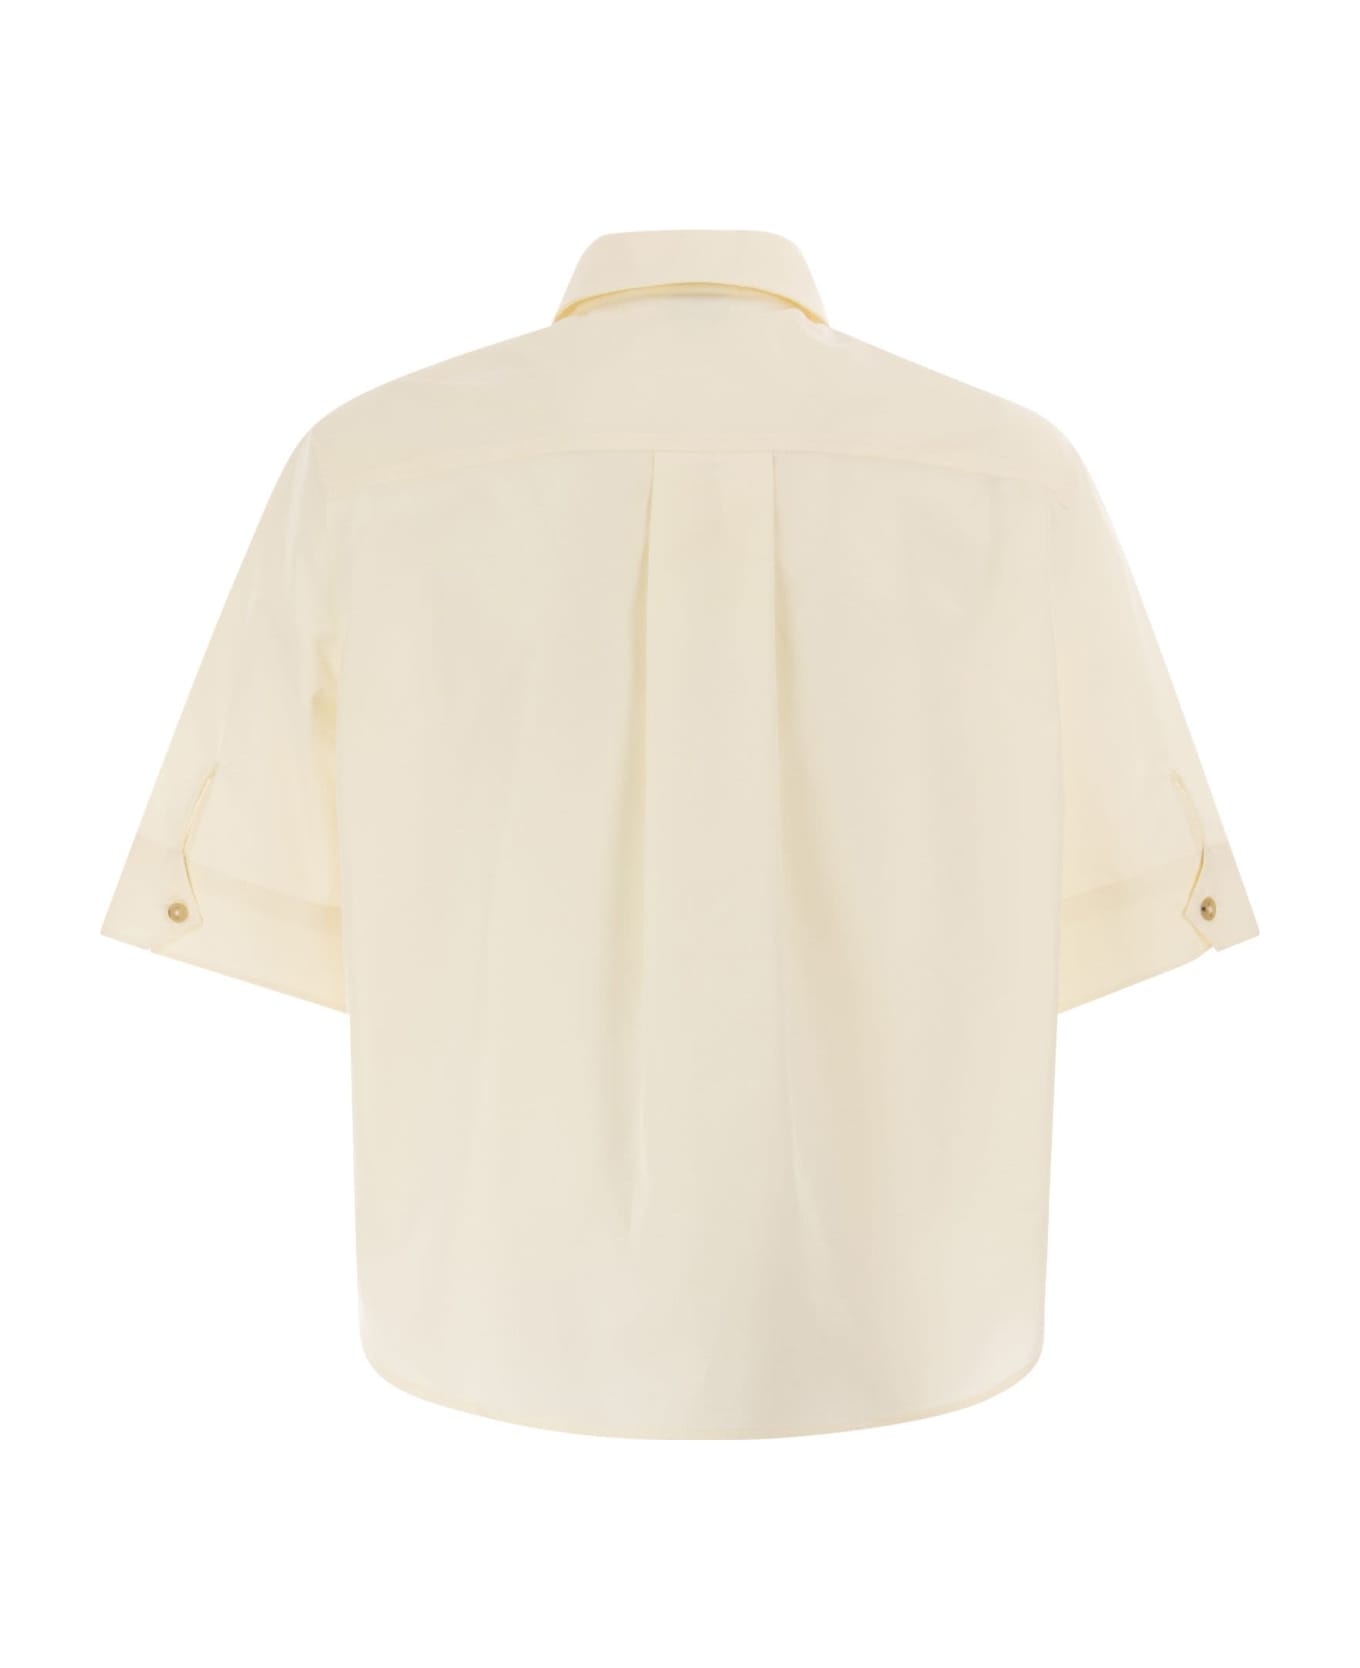 Fay Cropped Cotton Shirt - Cream